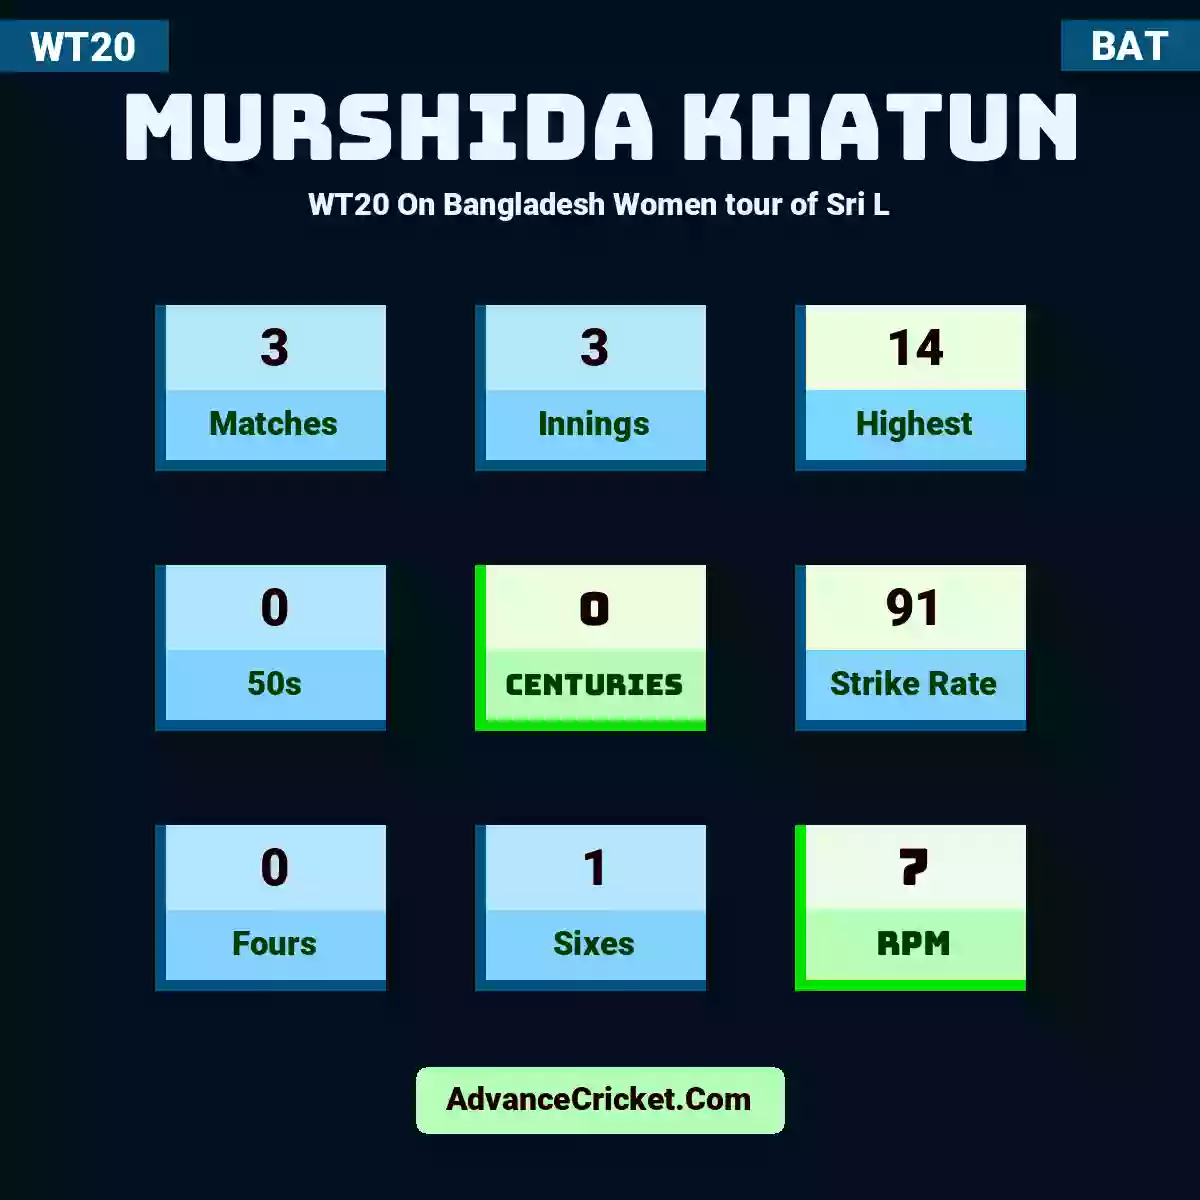 Murshida Khatun WT20  On Bangladesh Women tour of Sri L, Murshida Khatun played 3 matches, scored 14 runs as highest, 0 half-centuries, and 0 centuries, with a strike rate of 91. M.Khatun hit 0 fours and 1 sixes, with an RPM of 7.